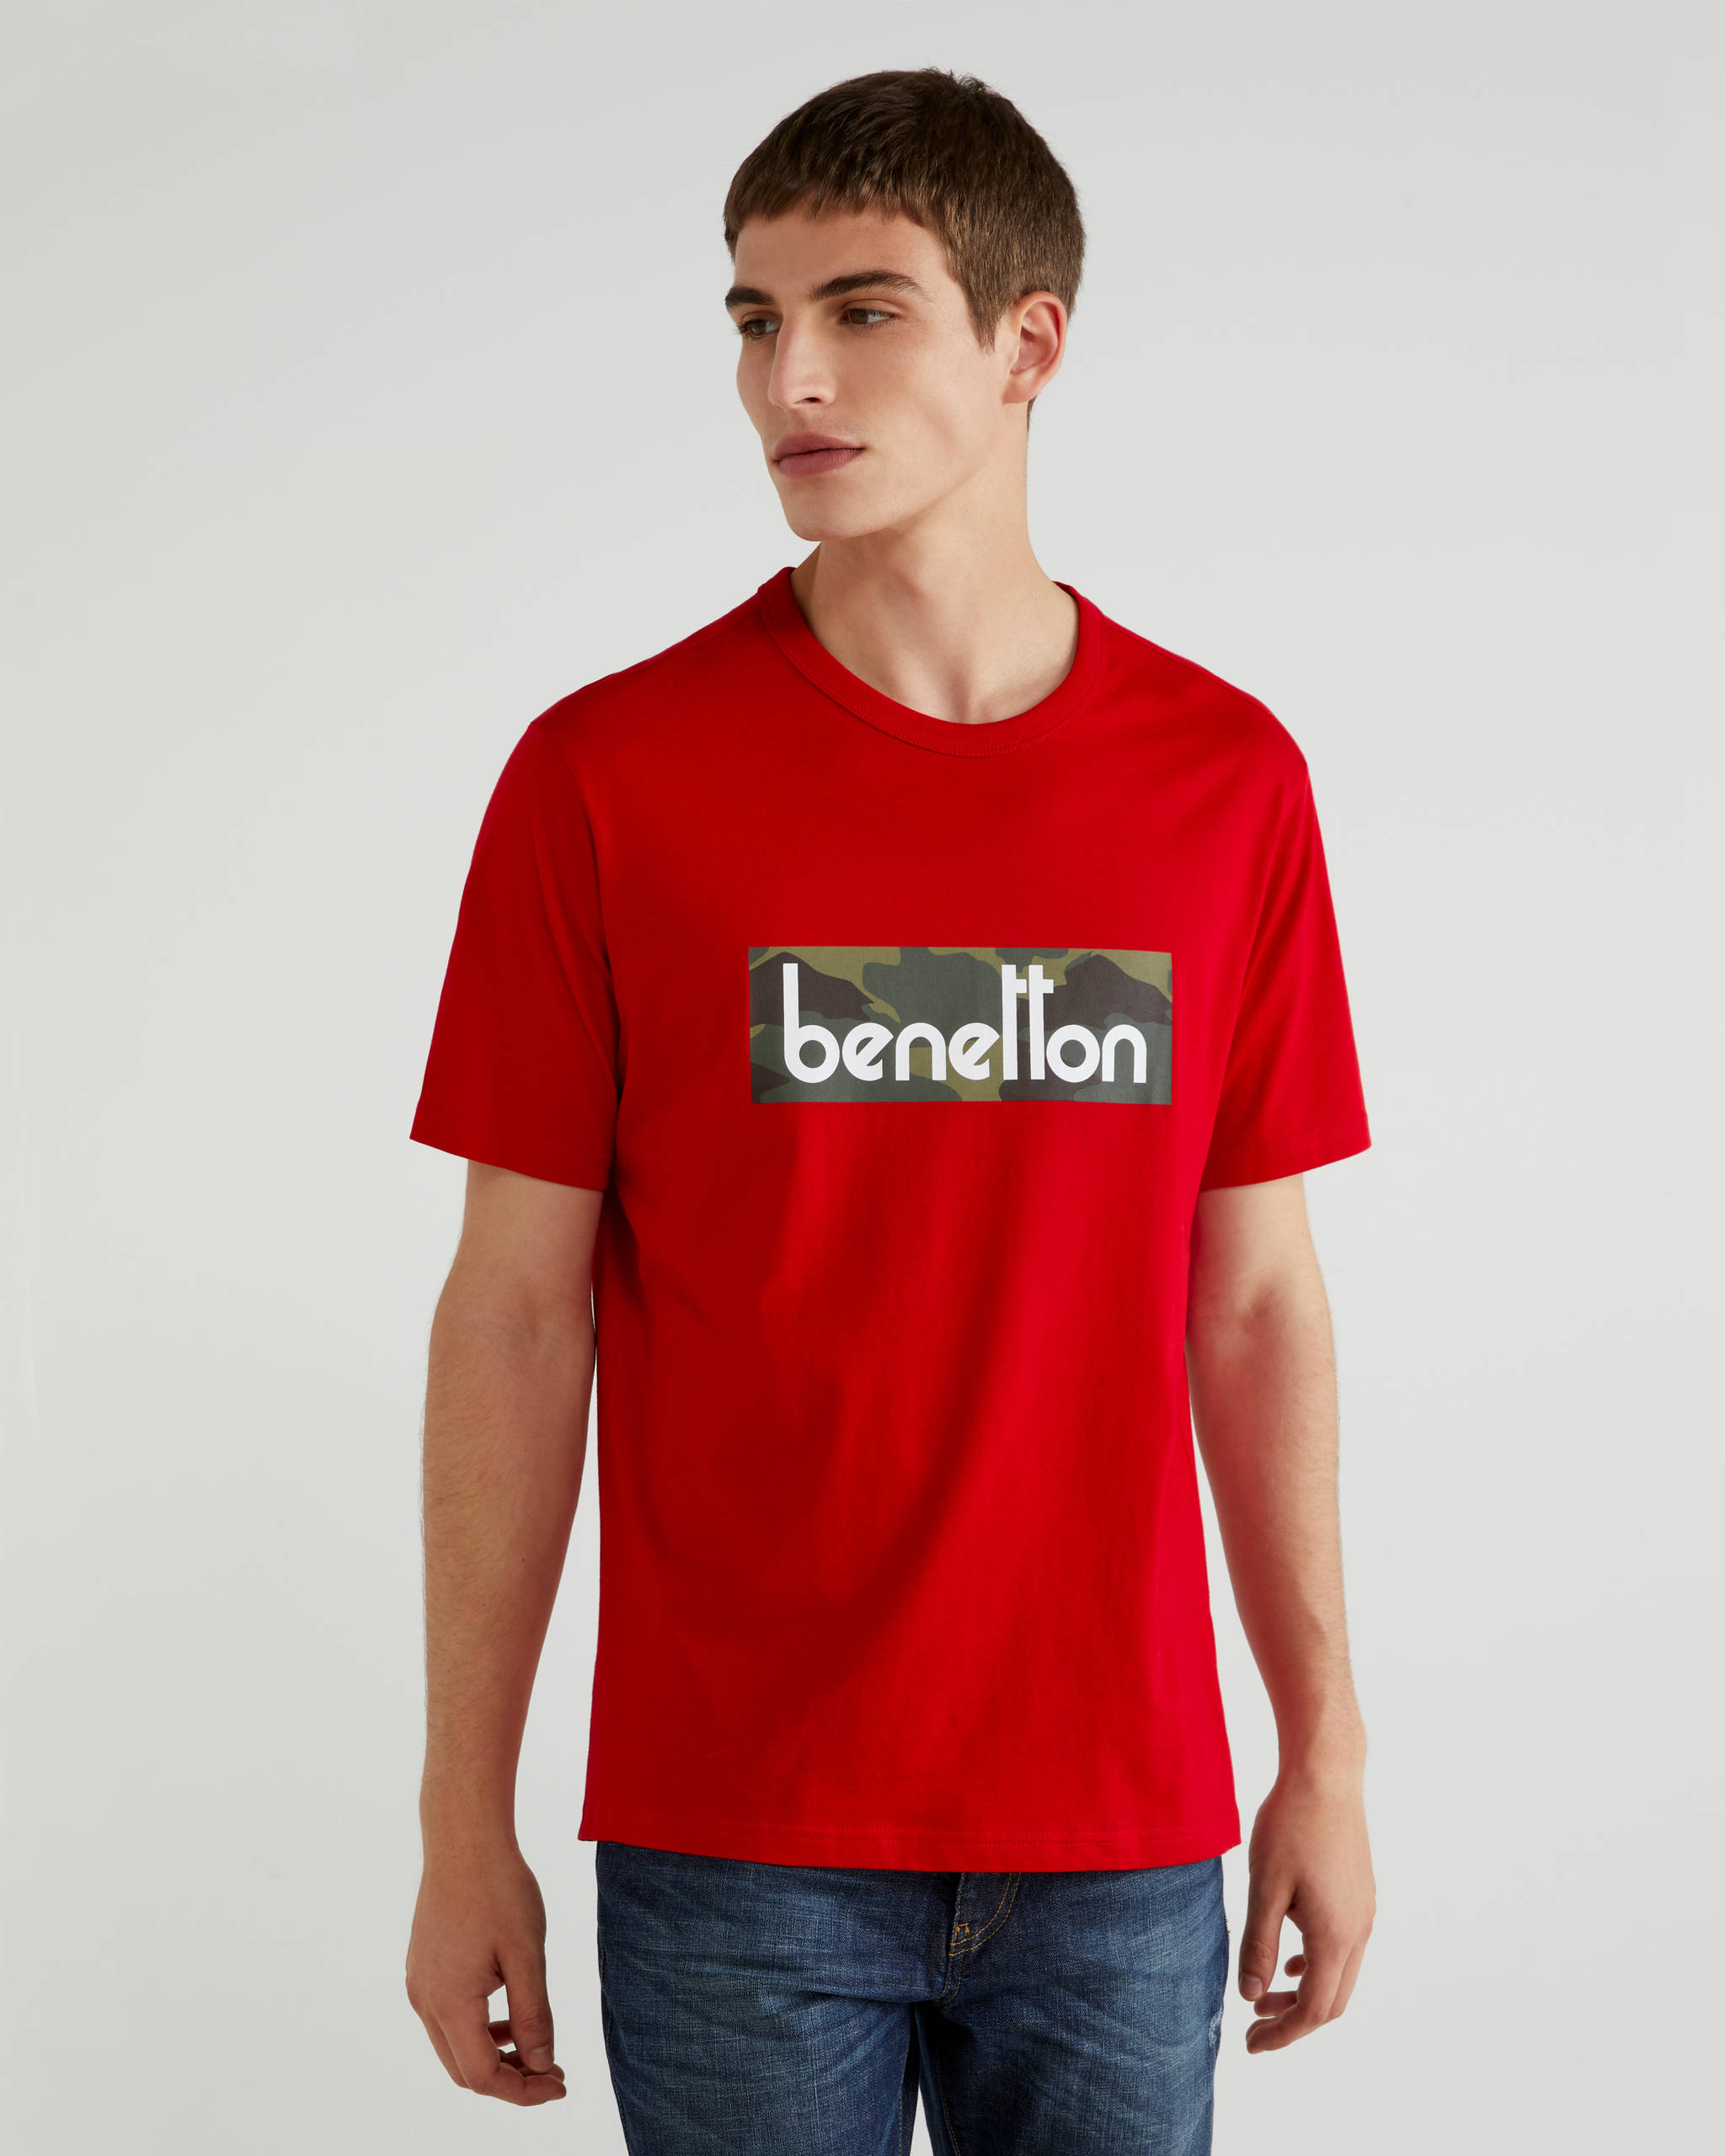 Benetton Vintage Logo Tshirt. 2